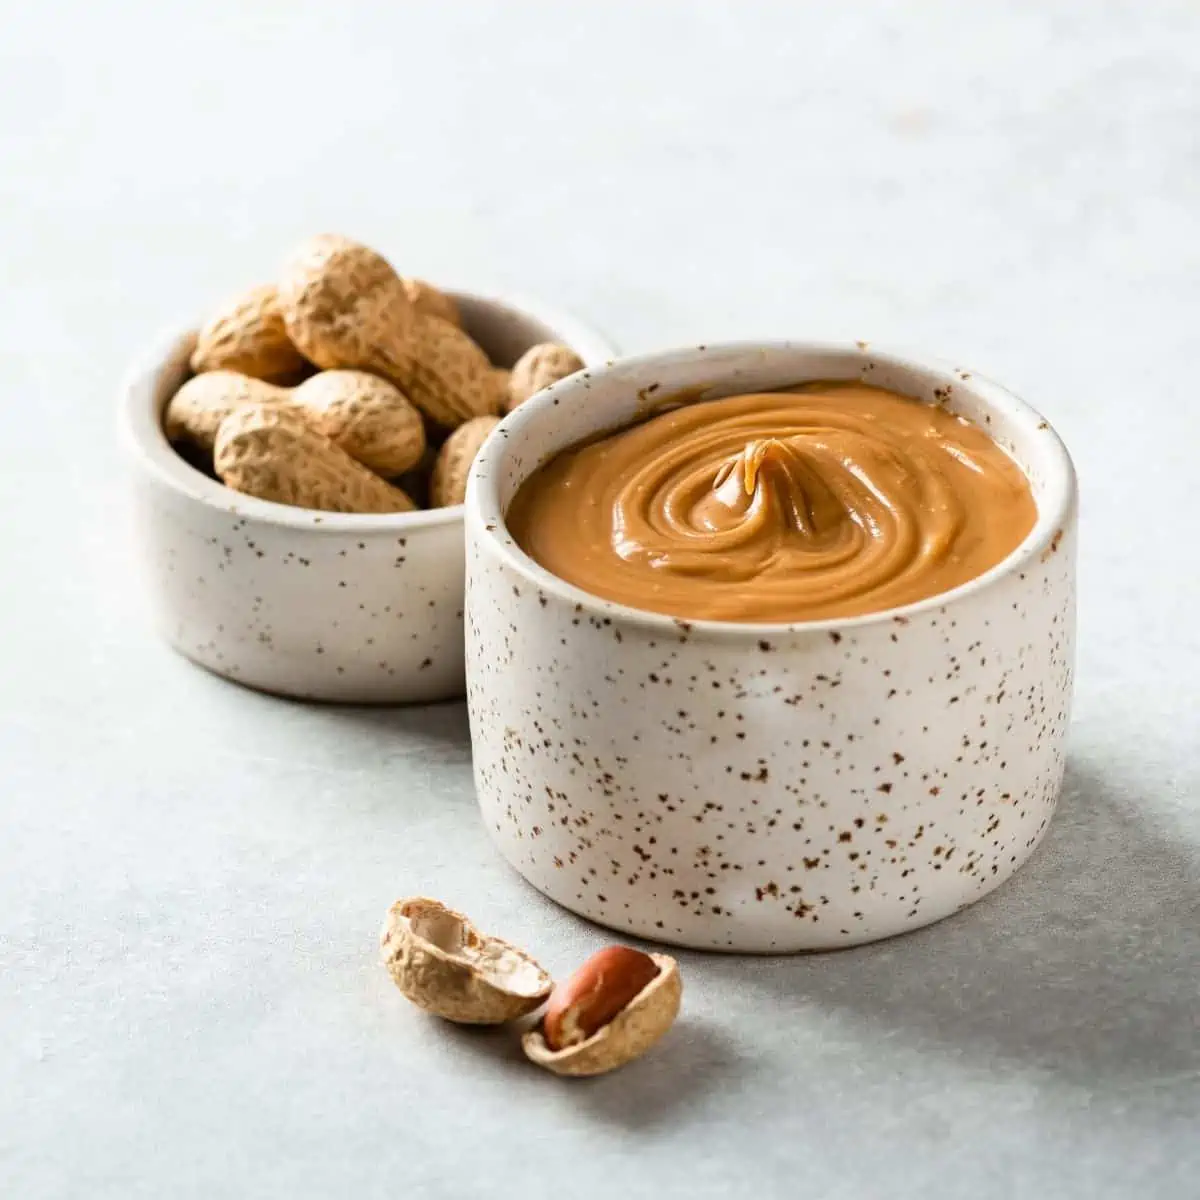 Is Peanut Butter Vegan? (Ingredients, Best Brands, and Recipe)